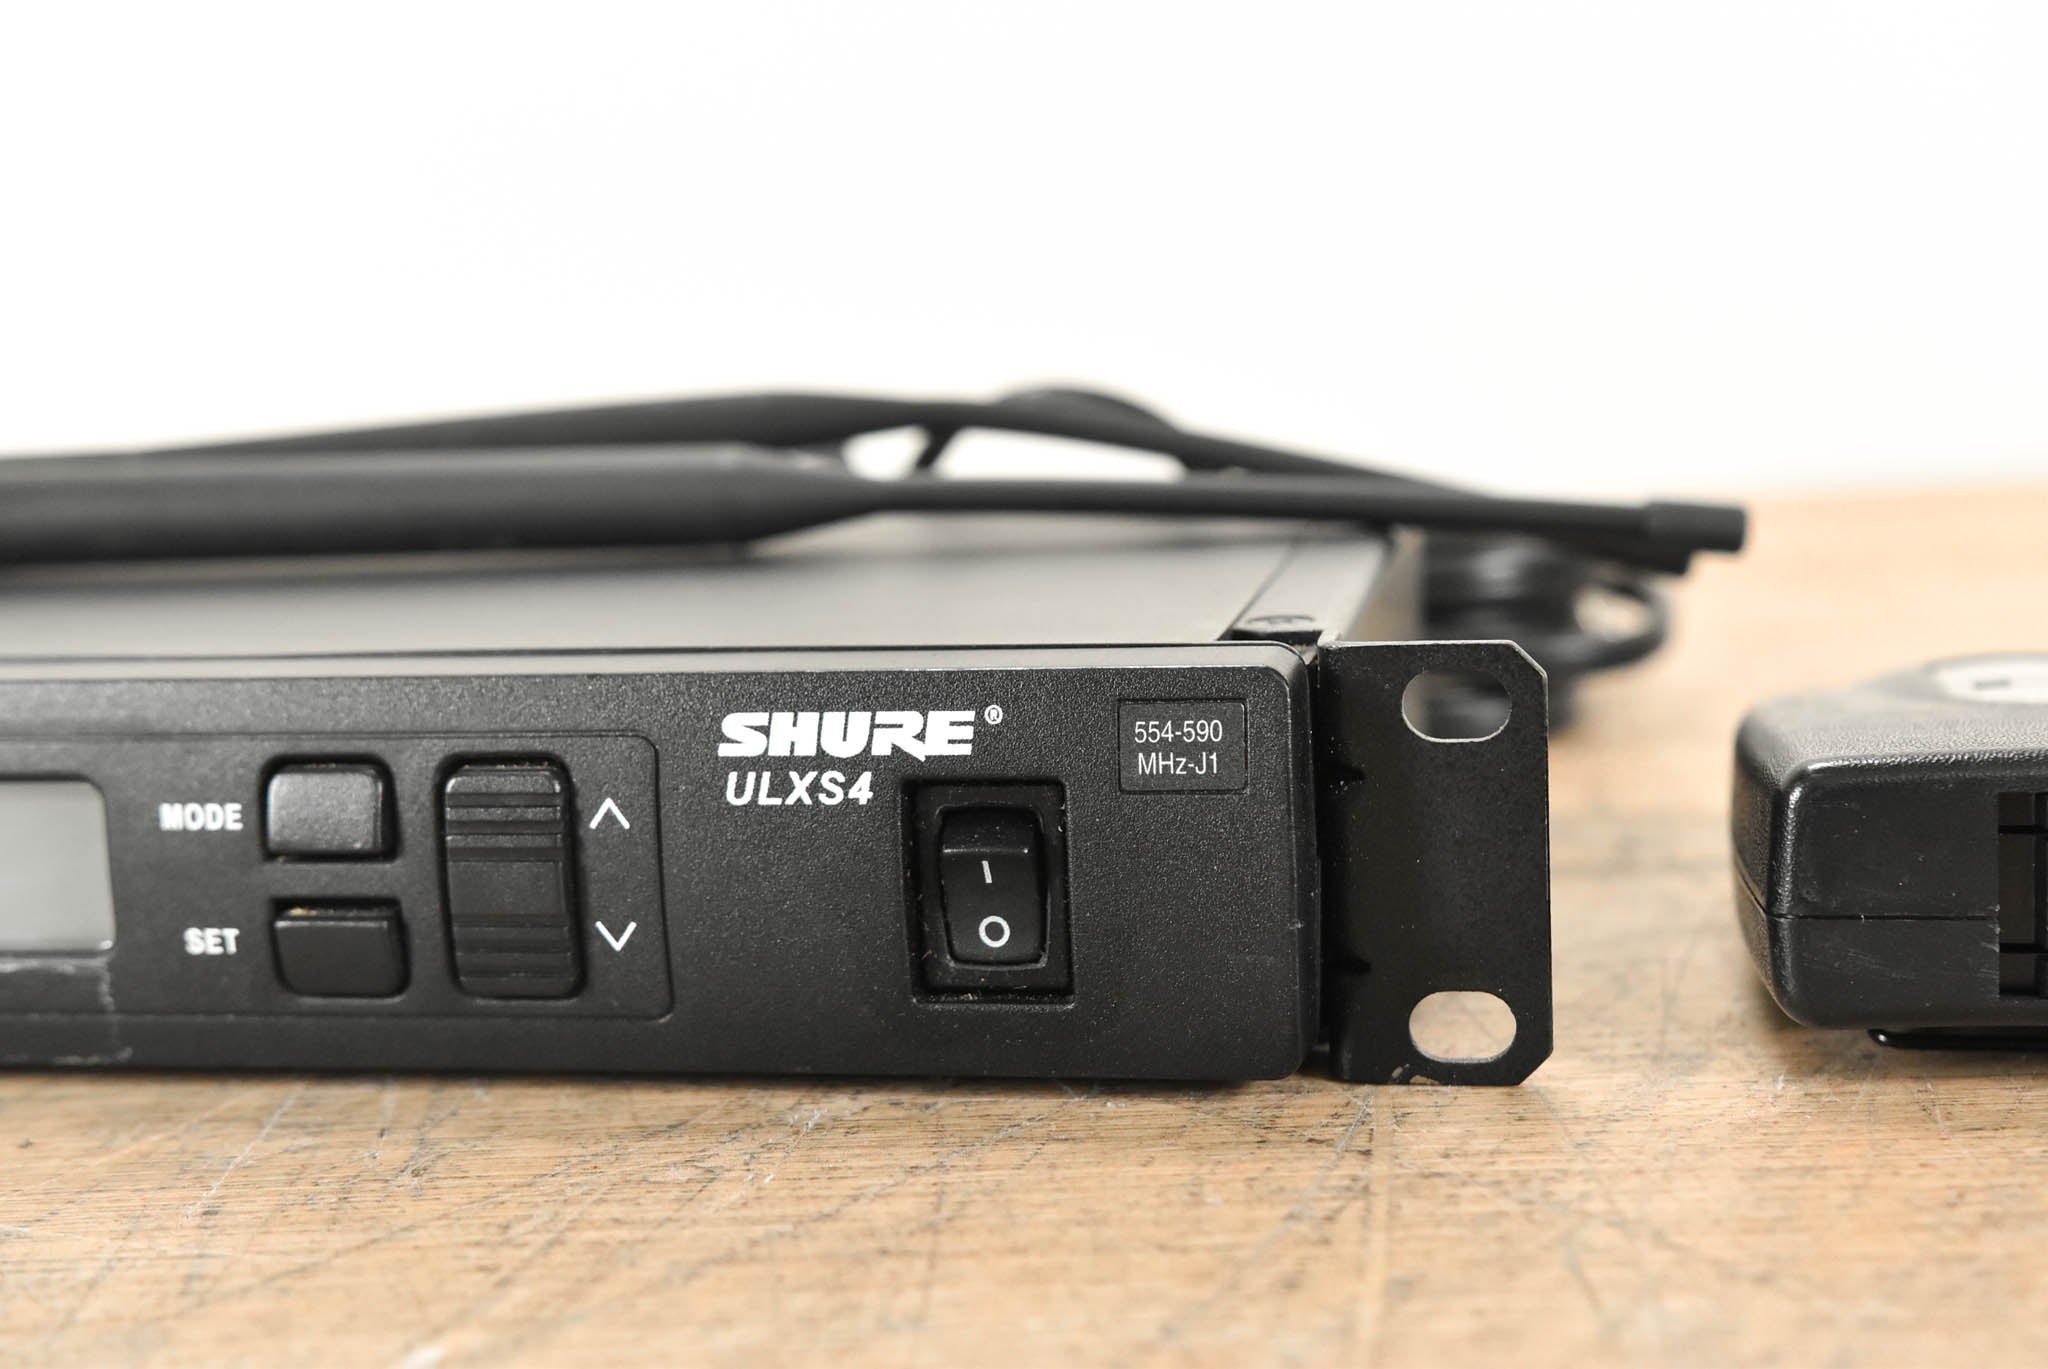 Shure ULXS14 Bodypack Wireless System - J1 Band: 554-590 MHz